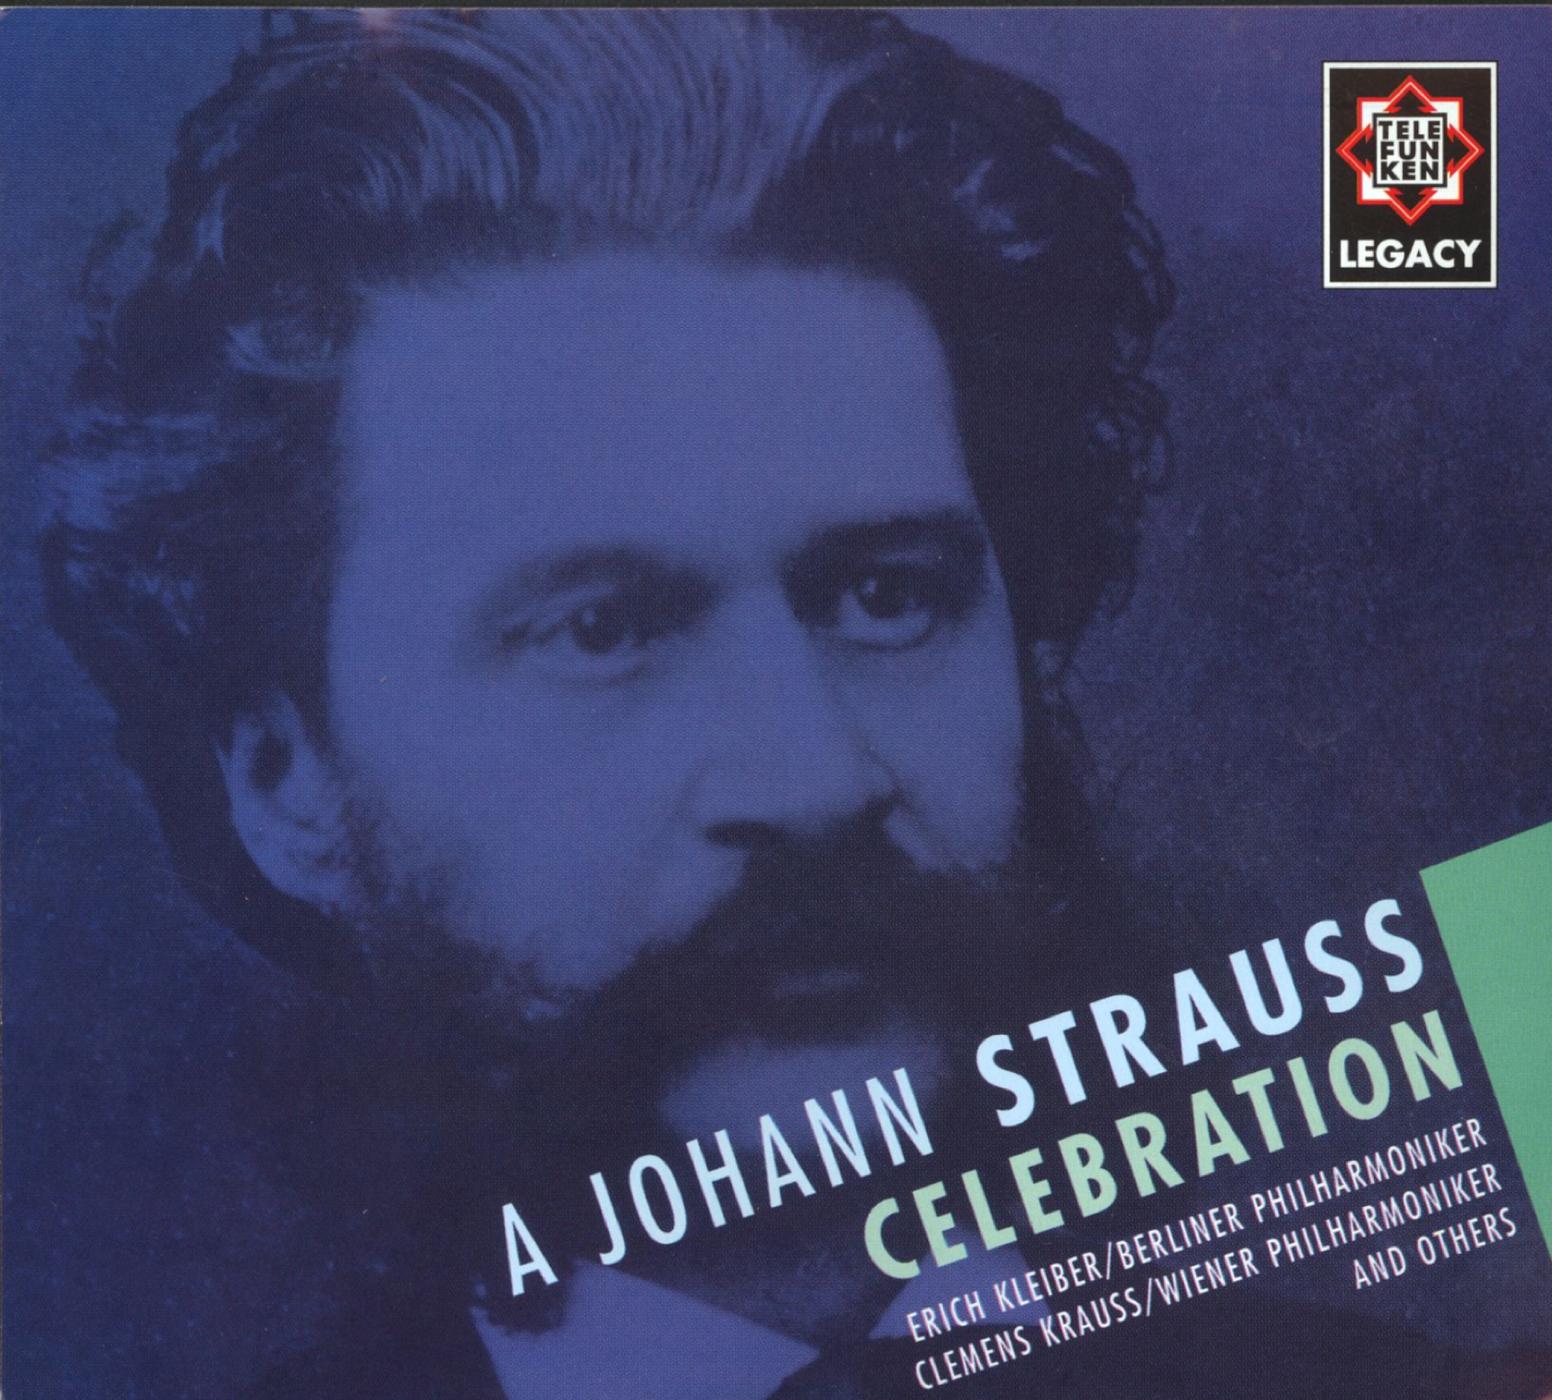 Strauss, Johann II : Overture to Der Zigeunerbaron